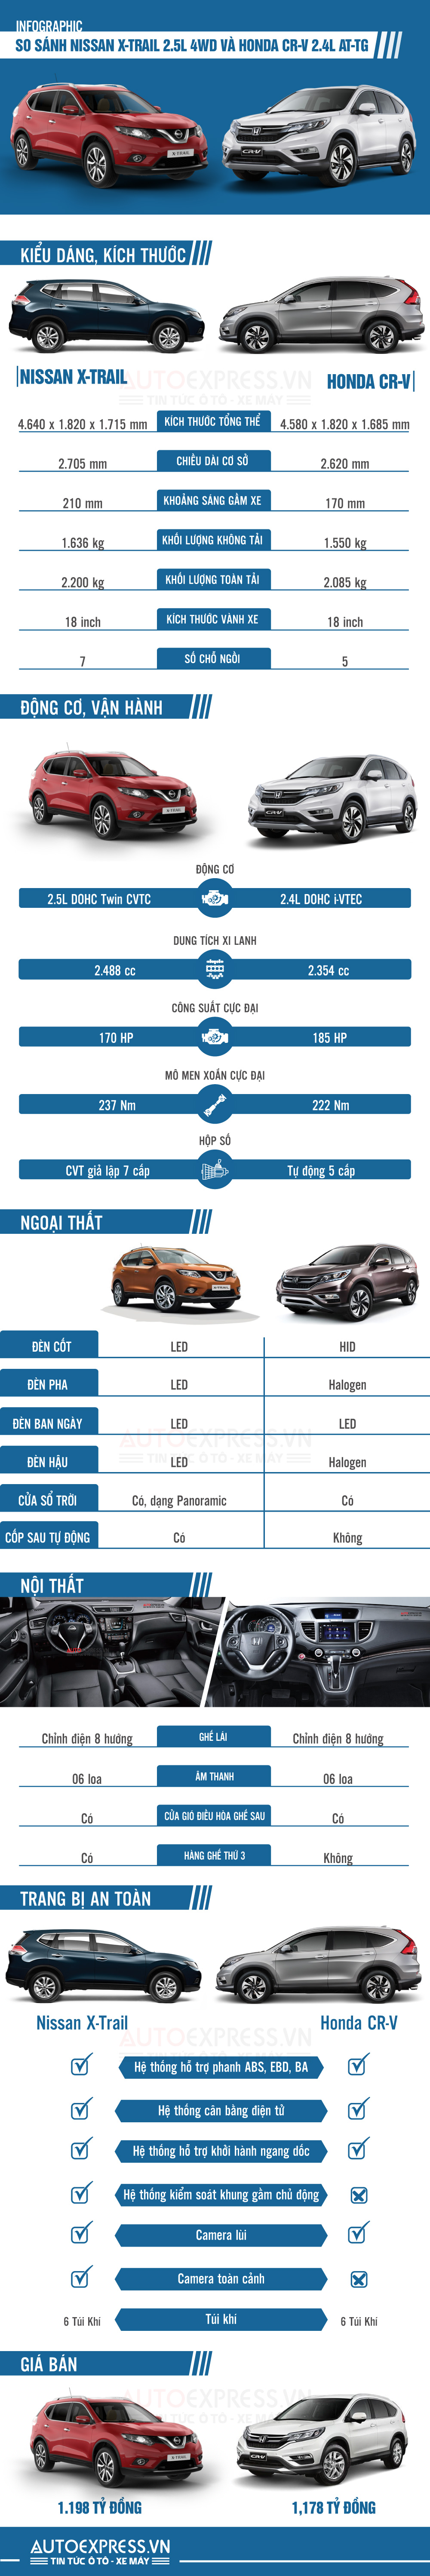 Lấy Nissan X-Trail hay Honda CR-V khi chọn mua xe Crossover?